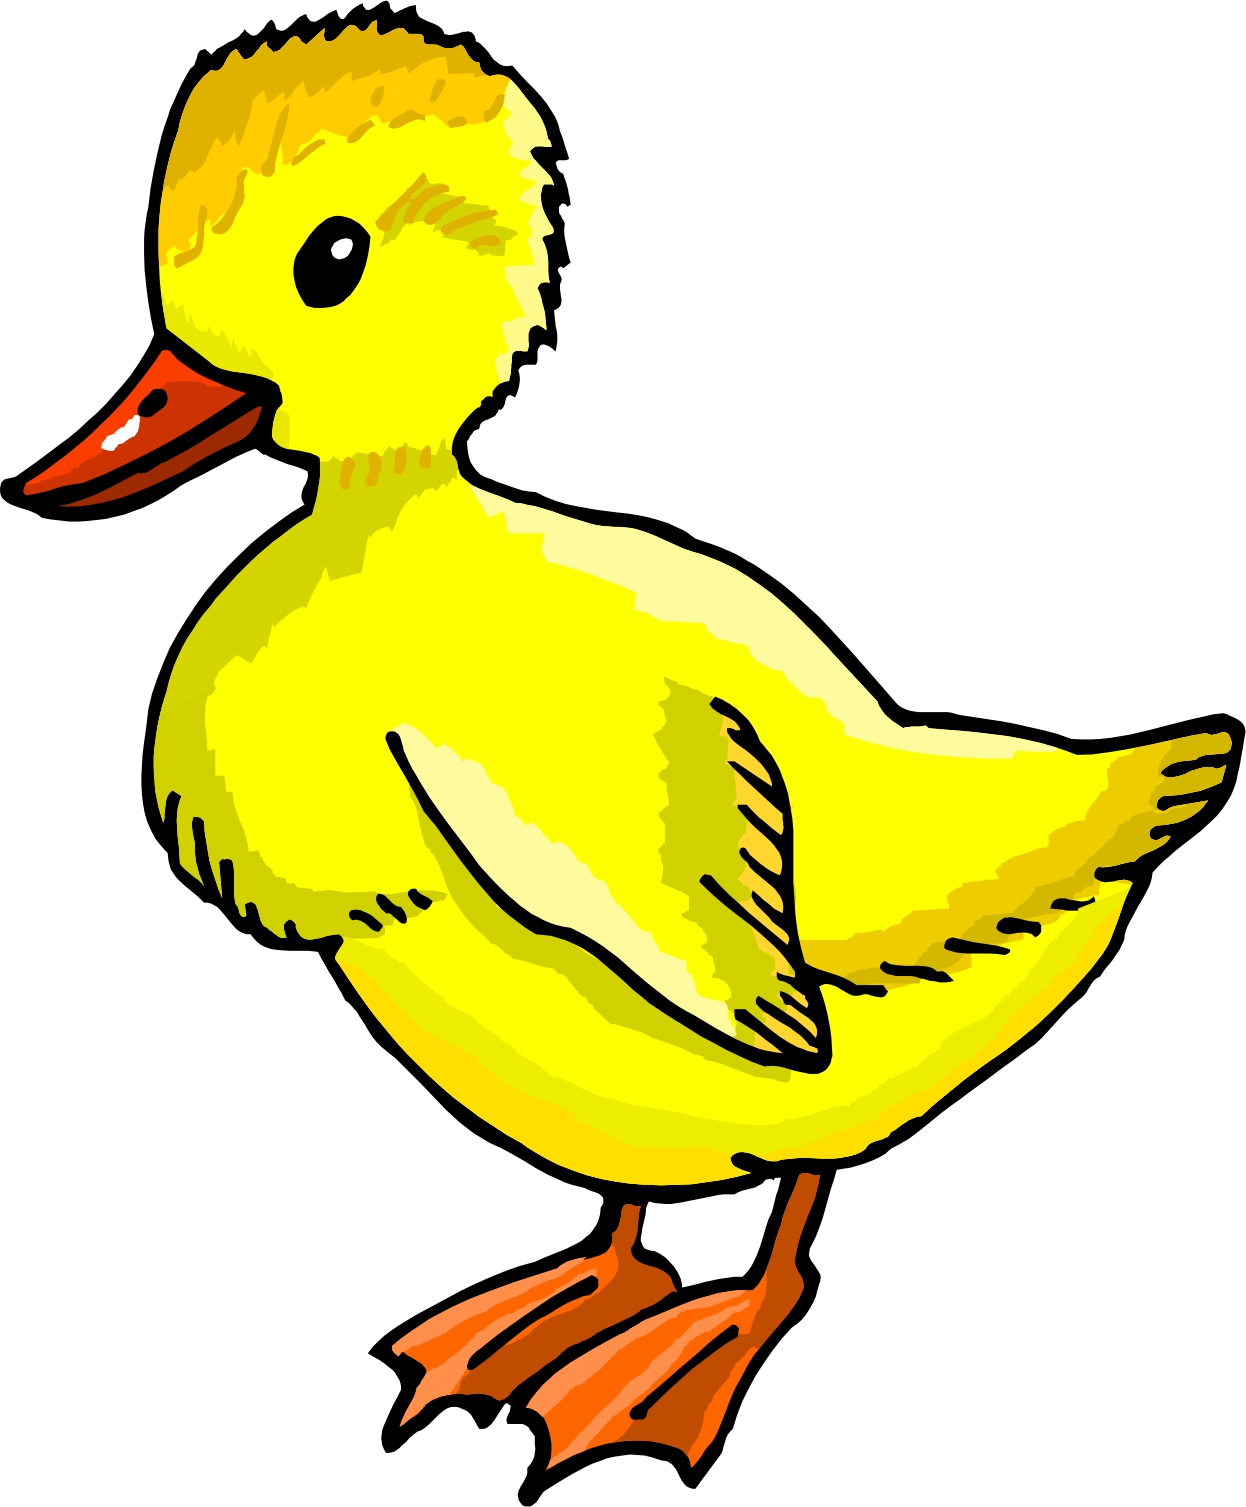 Cartoon Ducks Images Cliparts.co